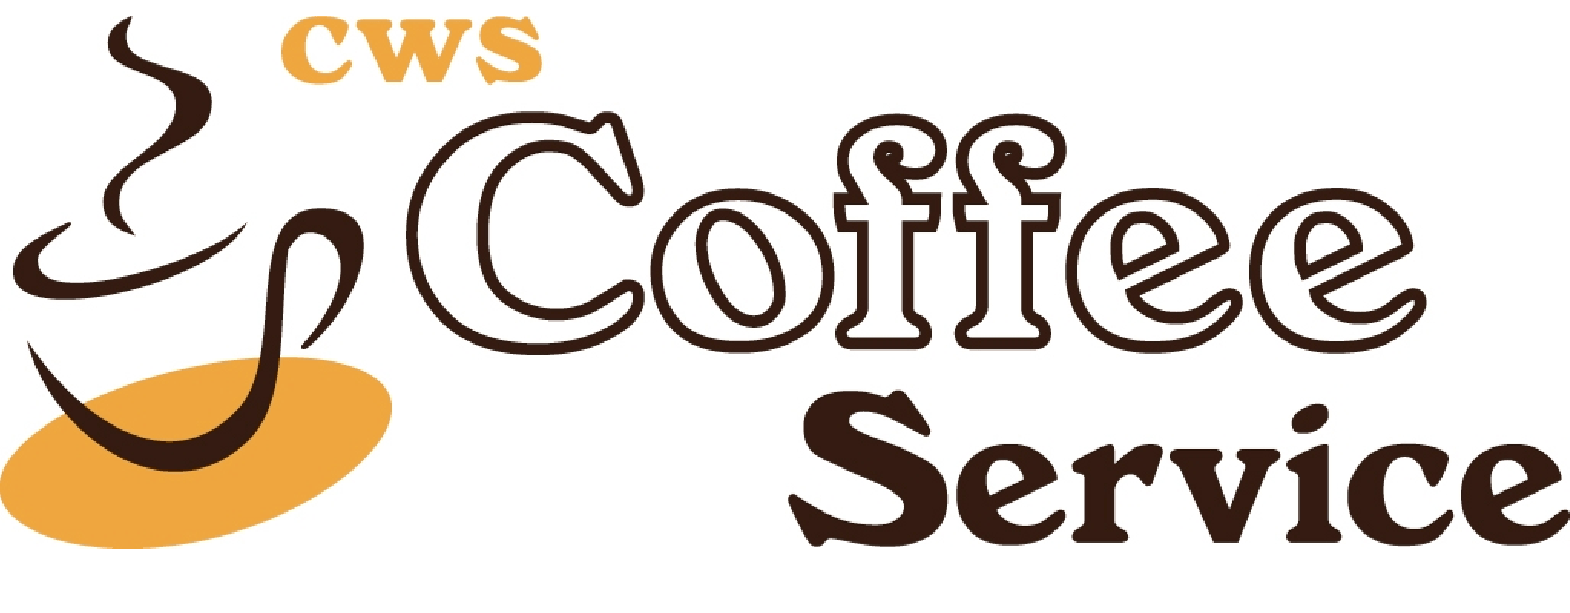 CWS Coffee service